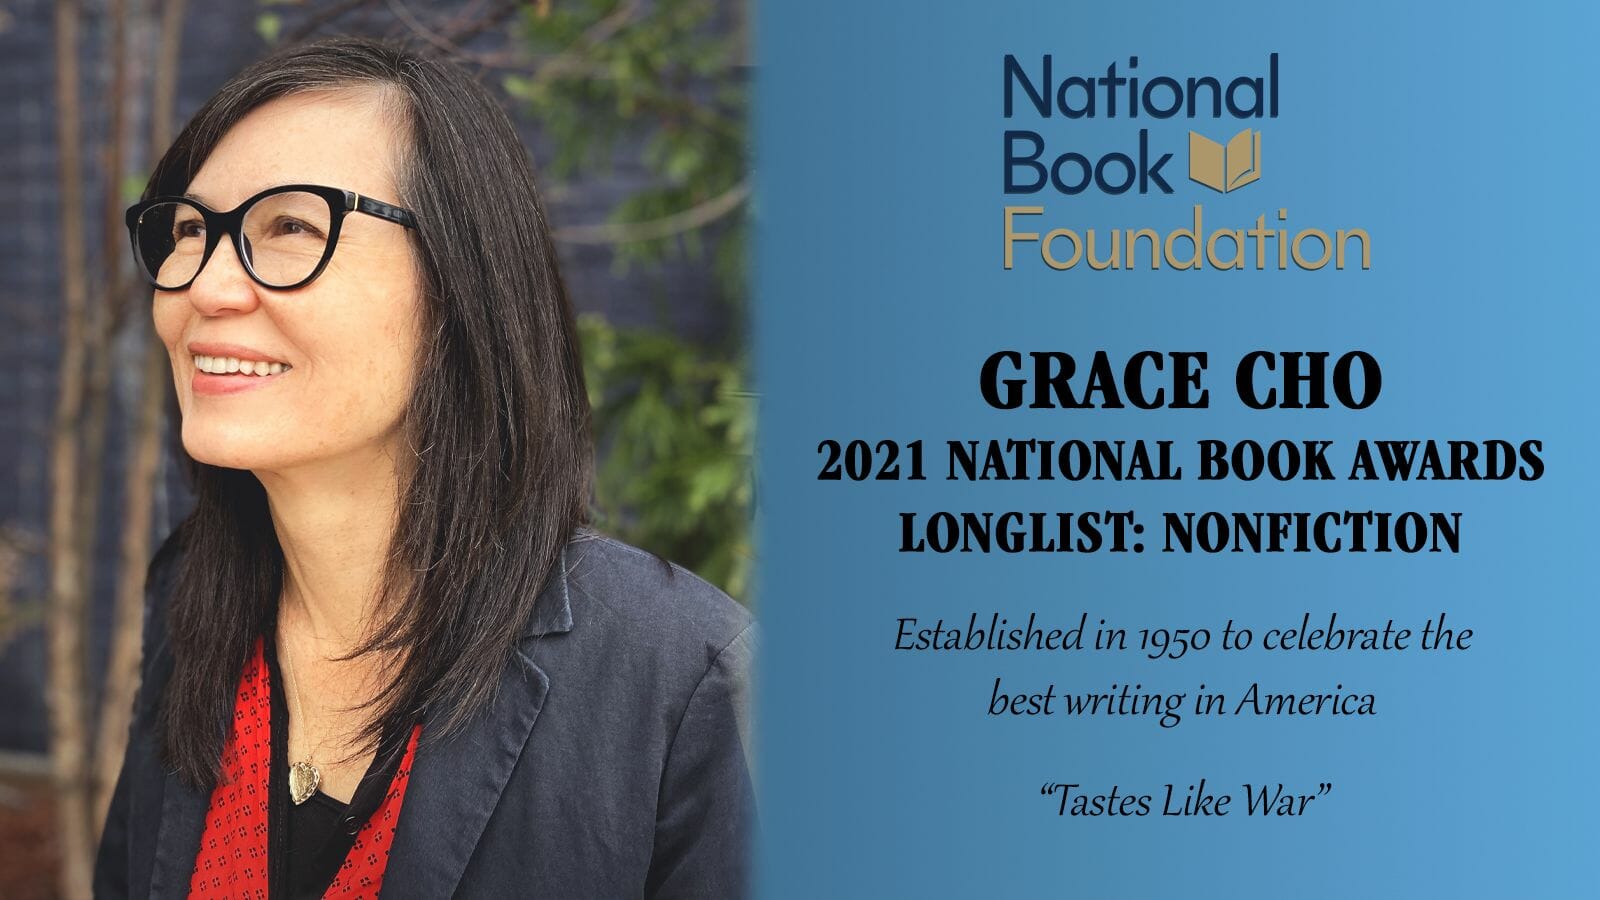 CSI’s Grace Cho Named to National Book Award Longlist